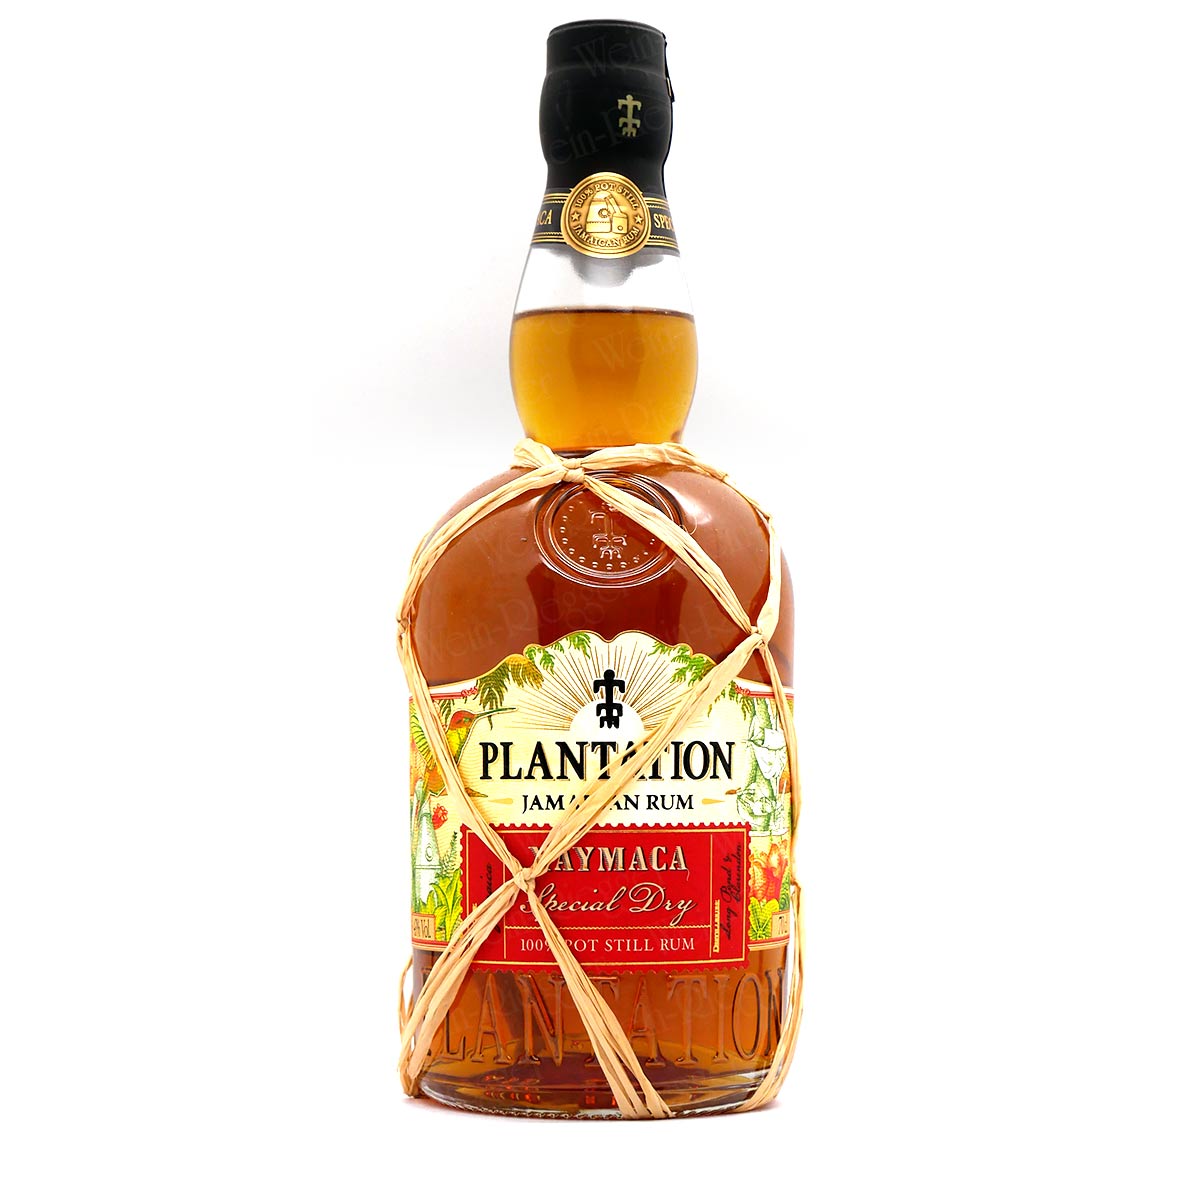 Plantation Xaymaca Special Dry Rum | Jamaican Rum